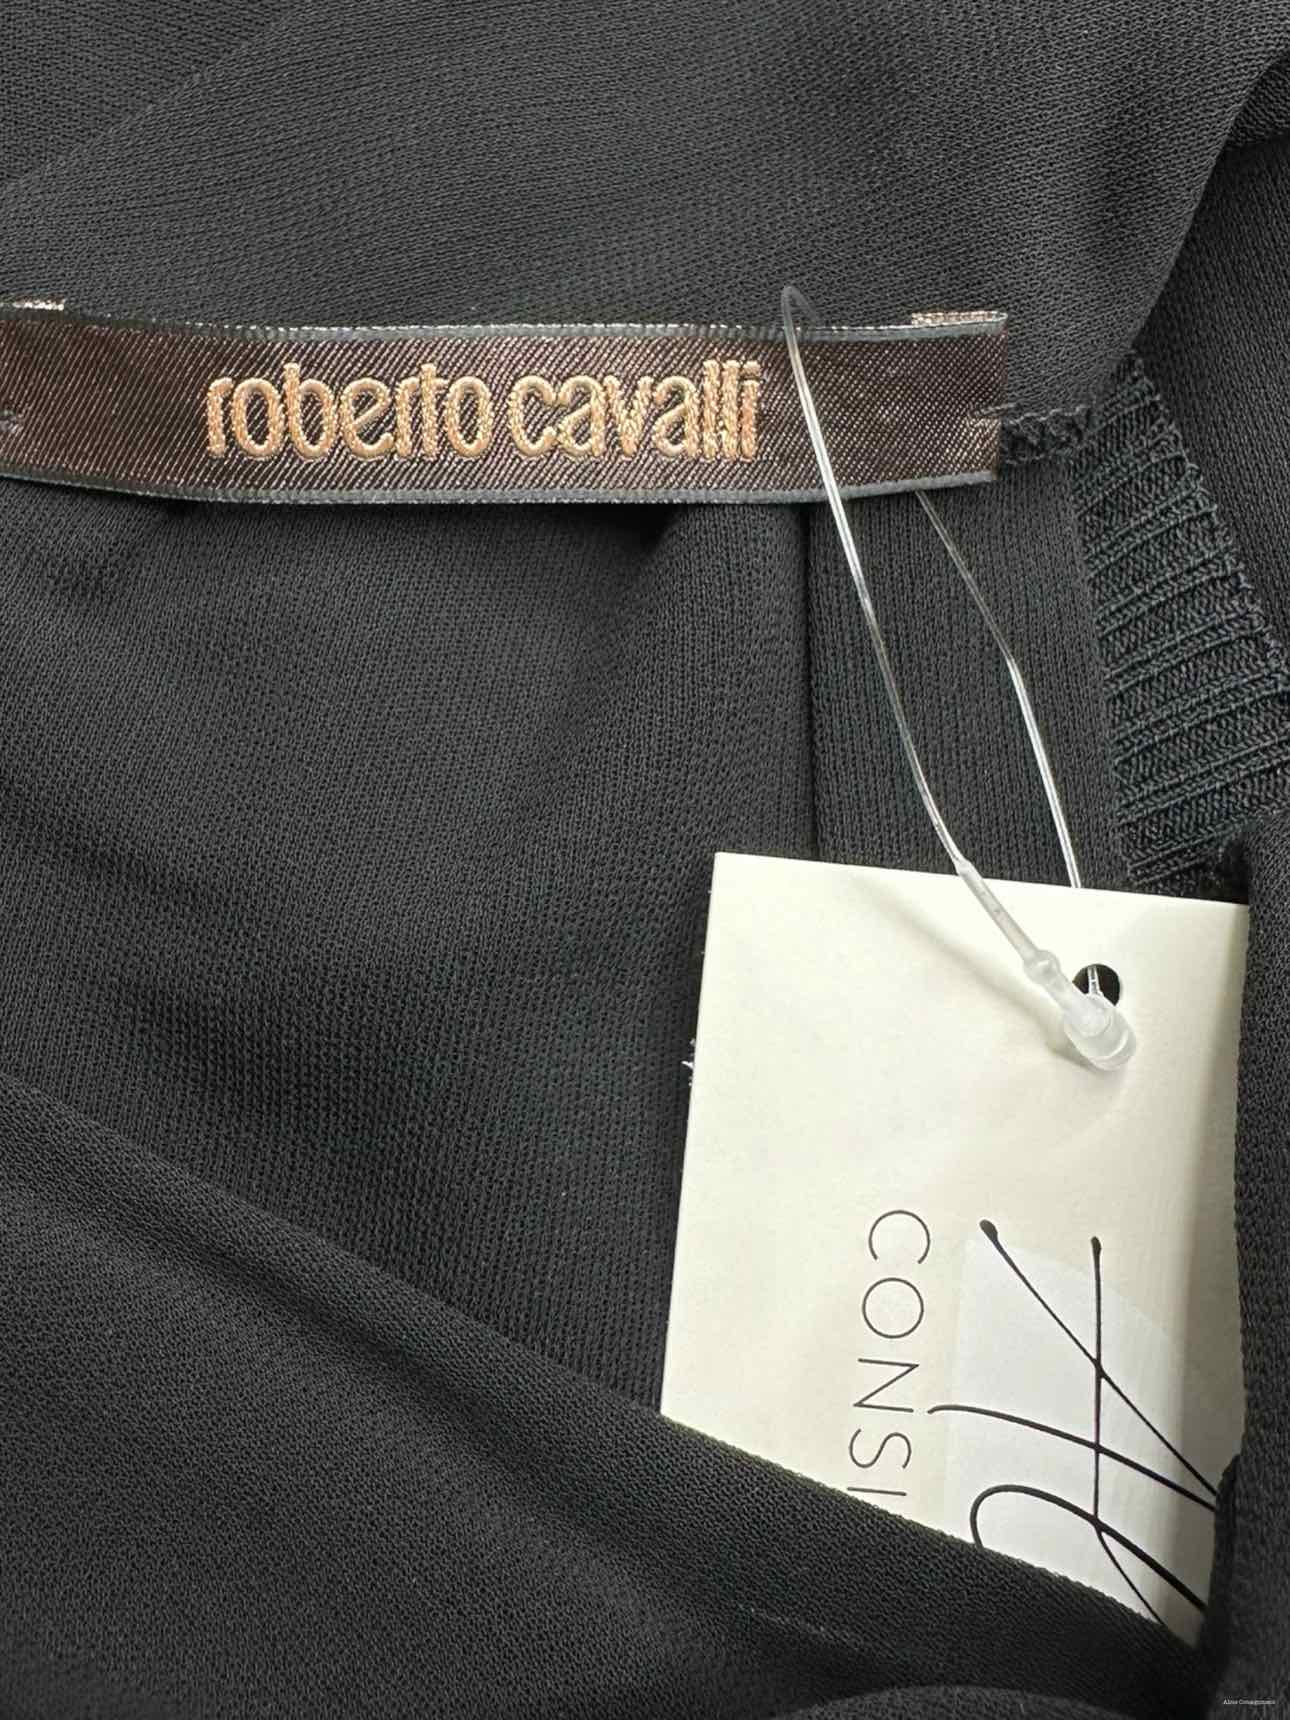 Roberto Cavalli Black Halter Cocktail Dress Size S